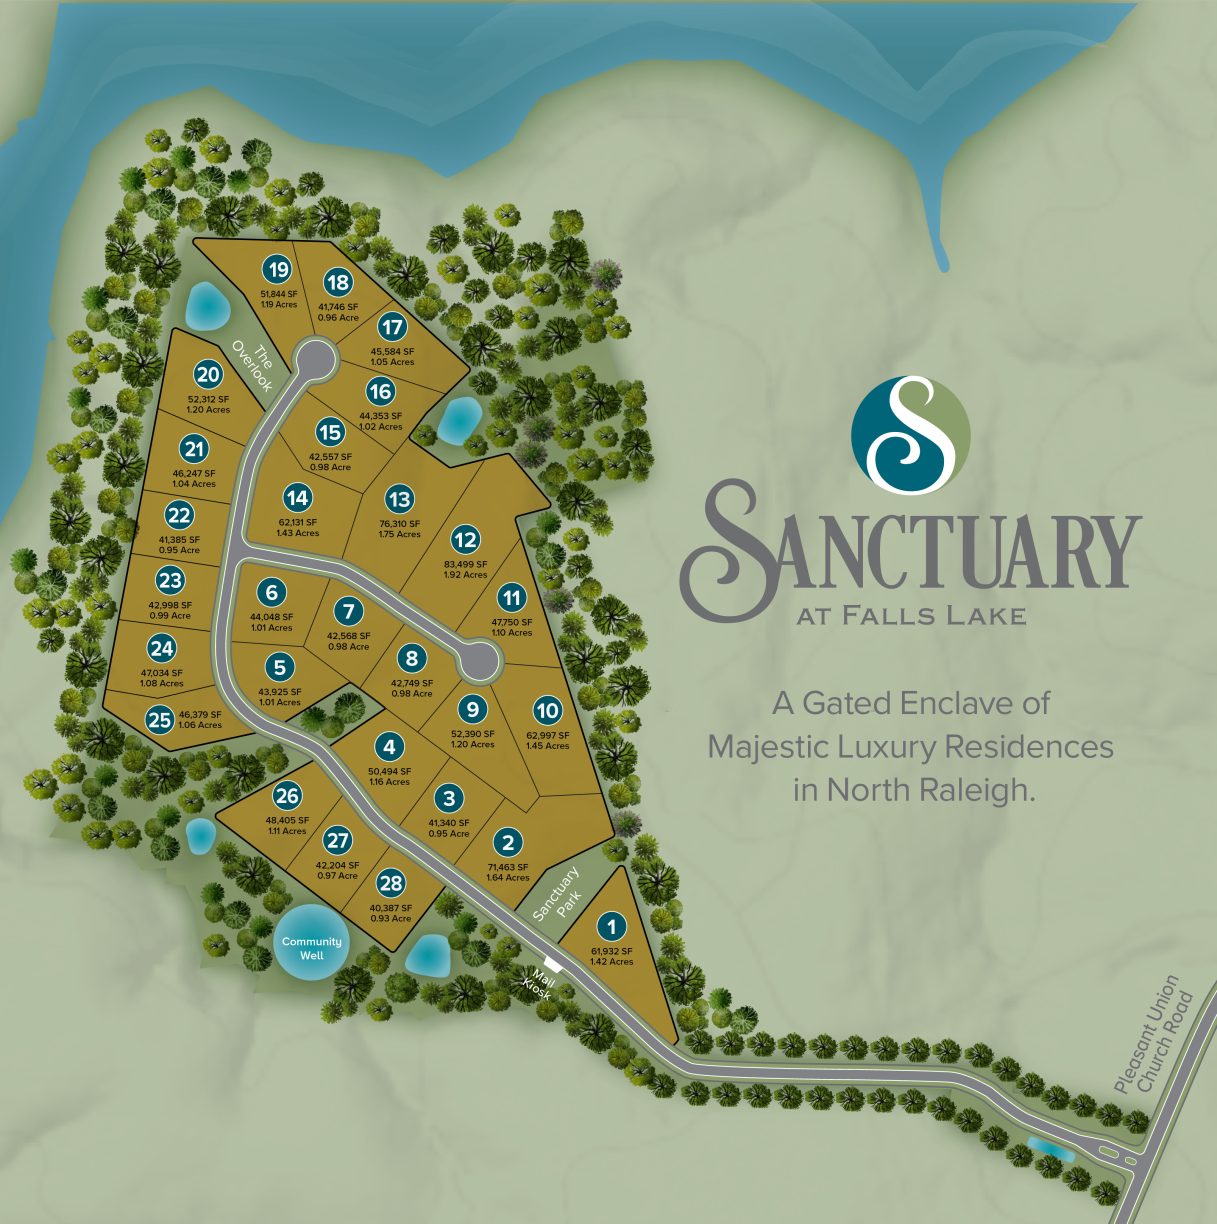 Sanctuary at Falls Lake site plan